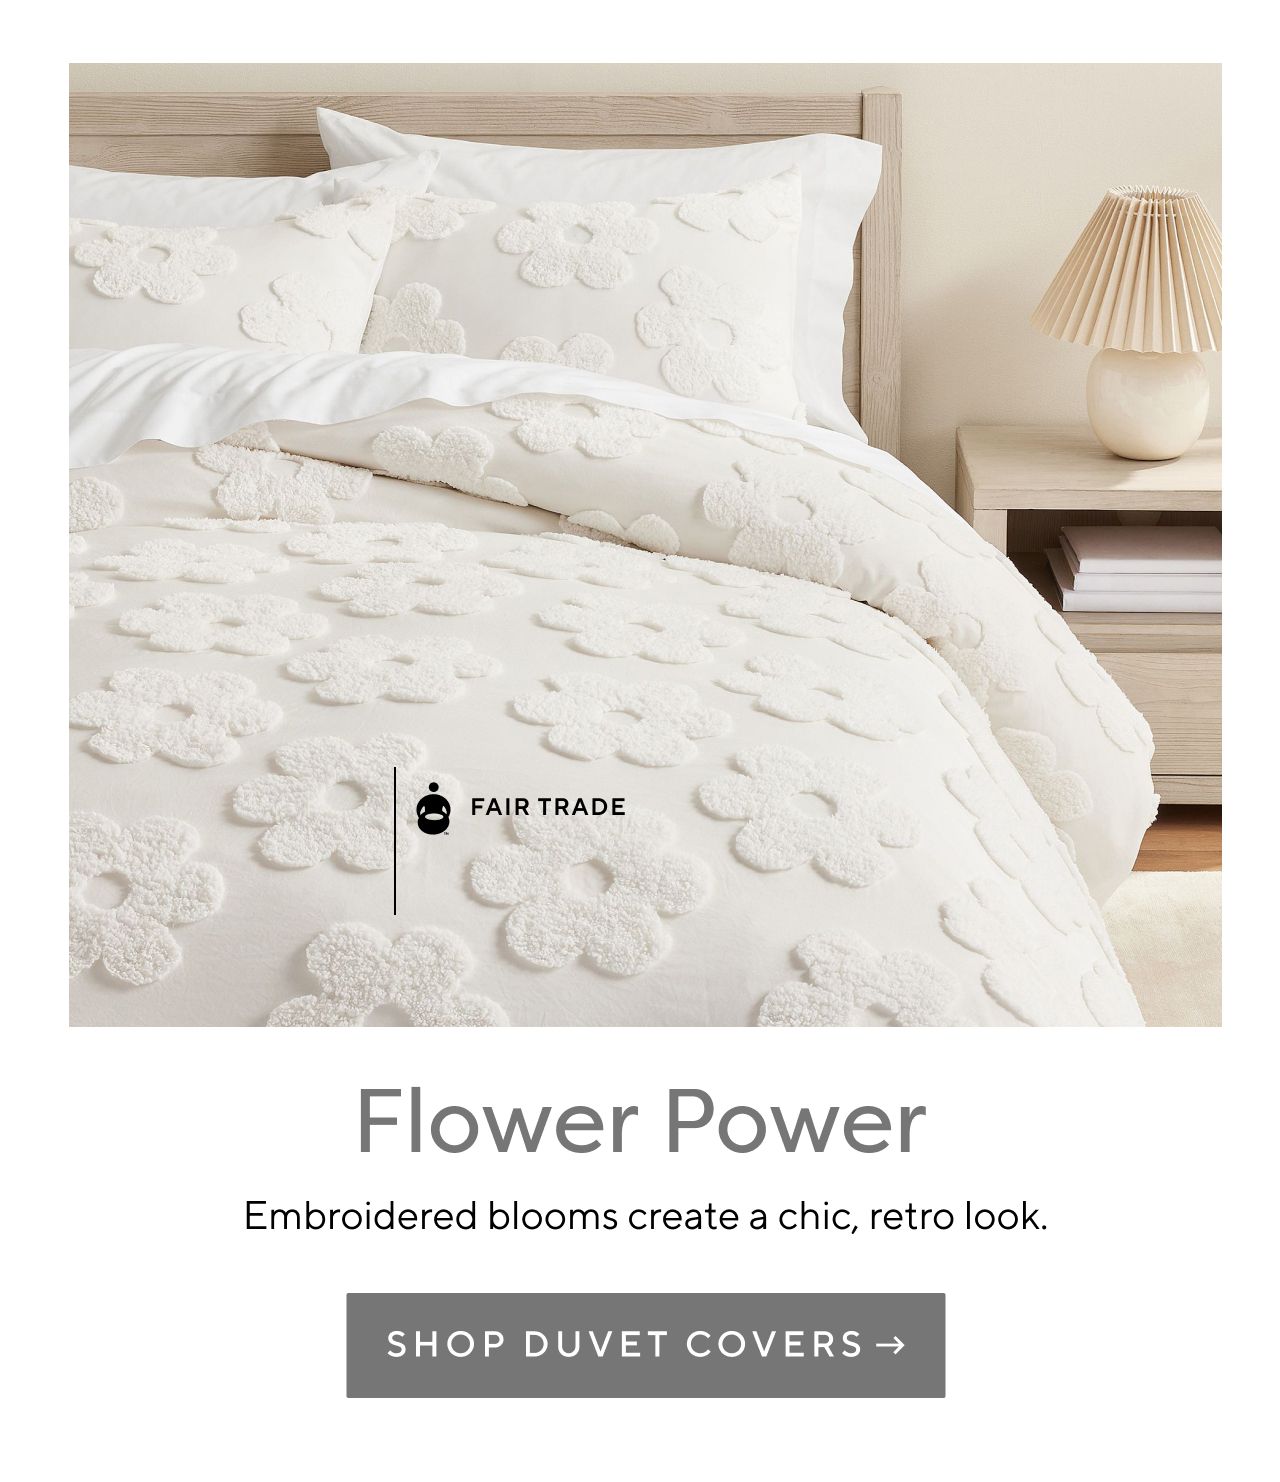 Flower Power. Shop Duvet Covers